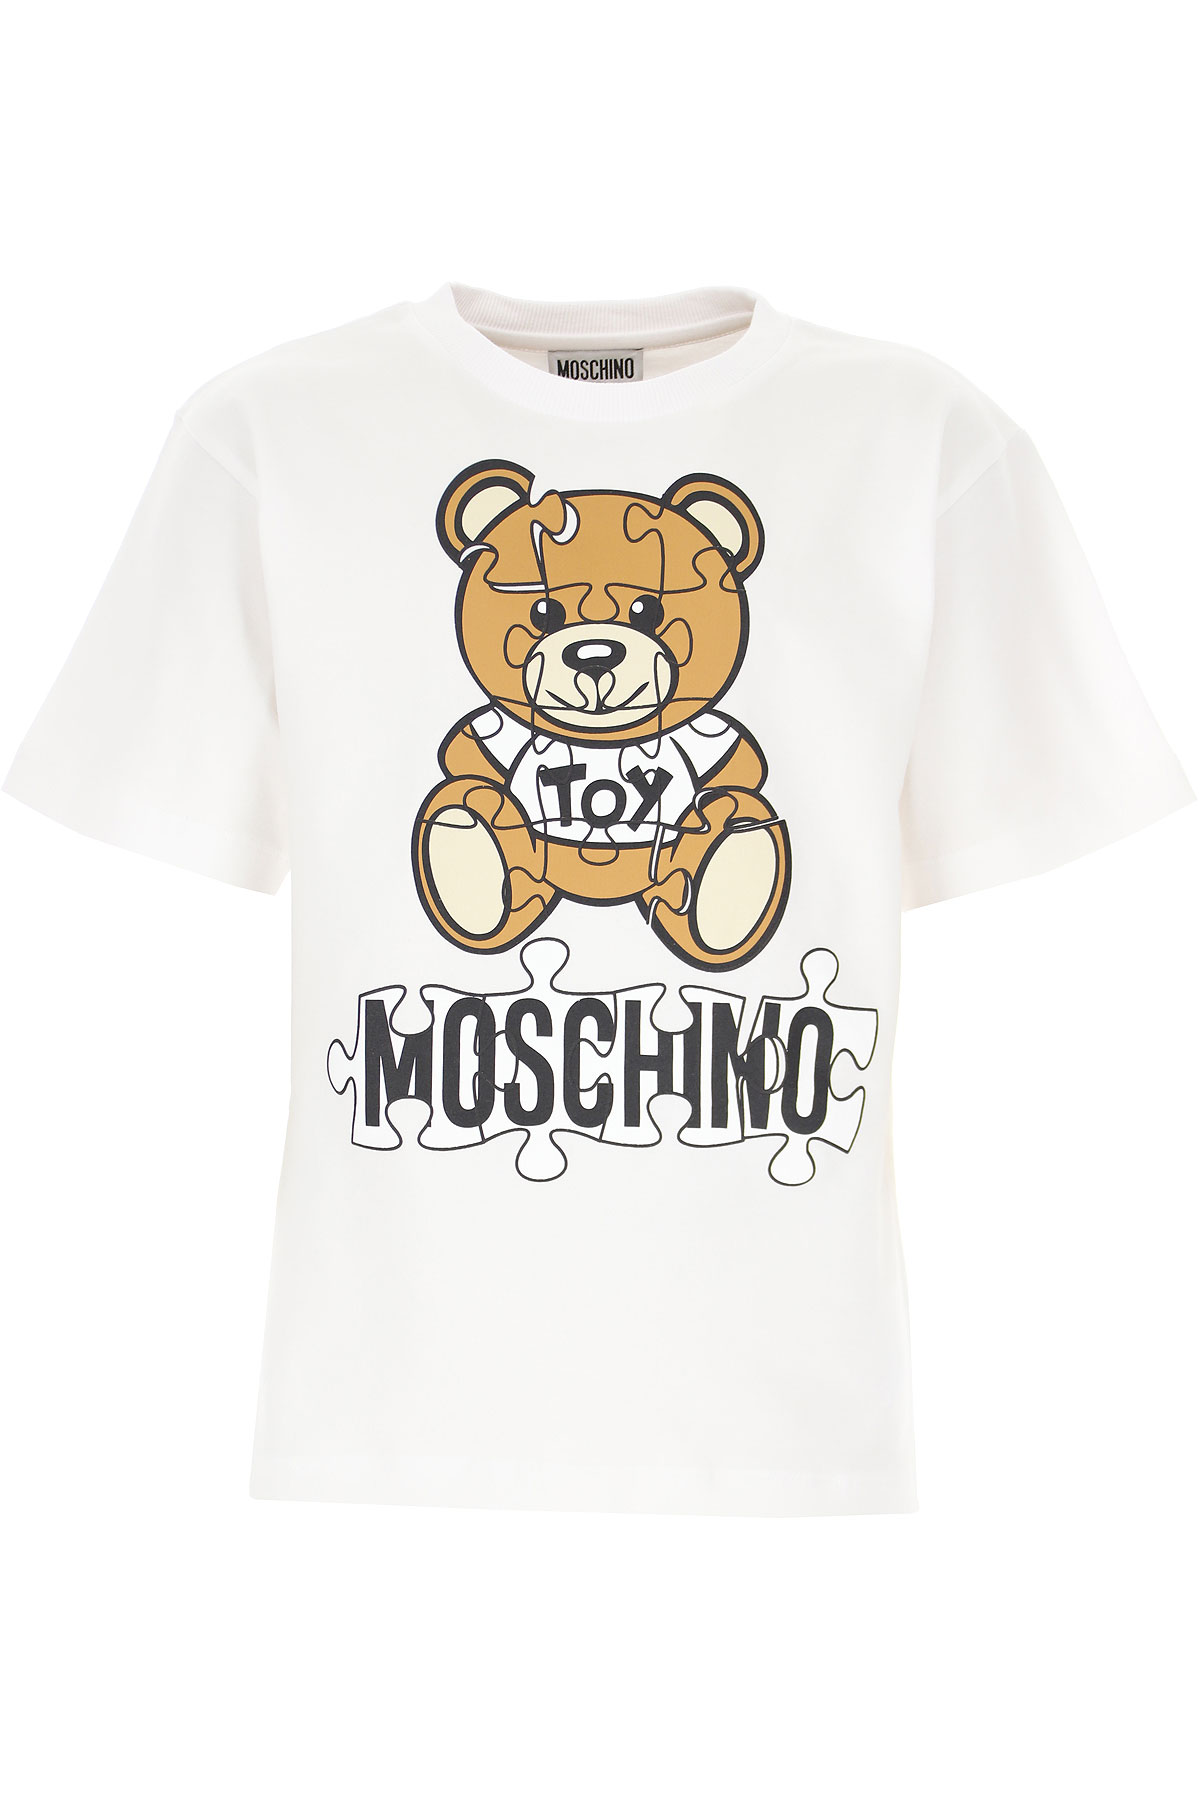 Kidswear Moschino, Style code: hum02x-lba11-10101